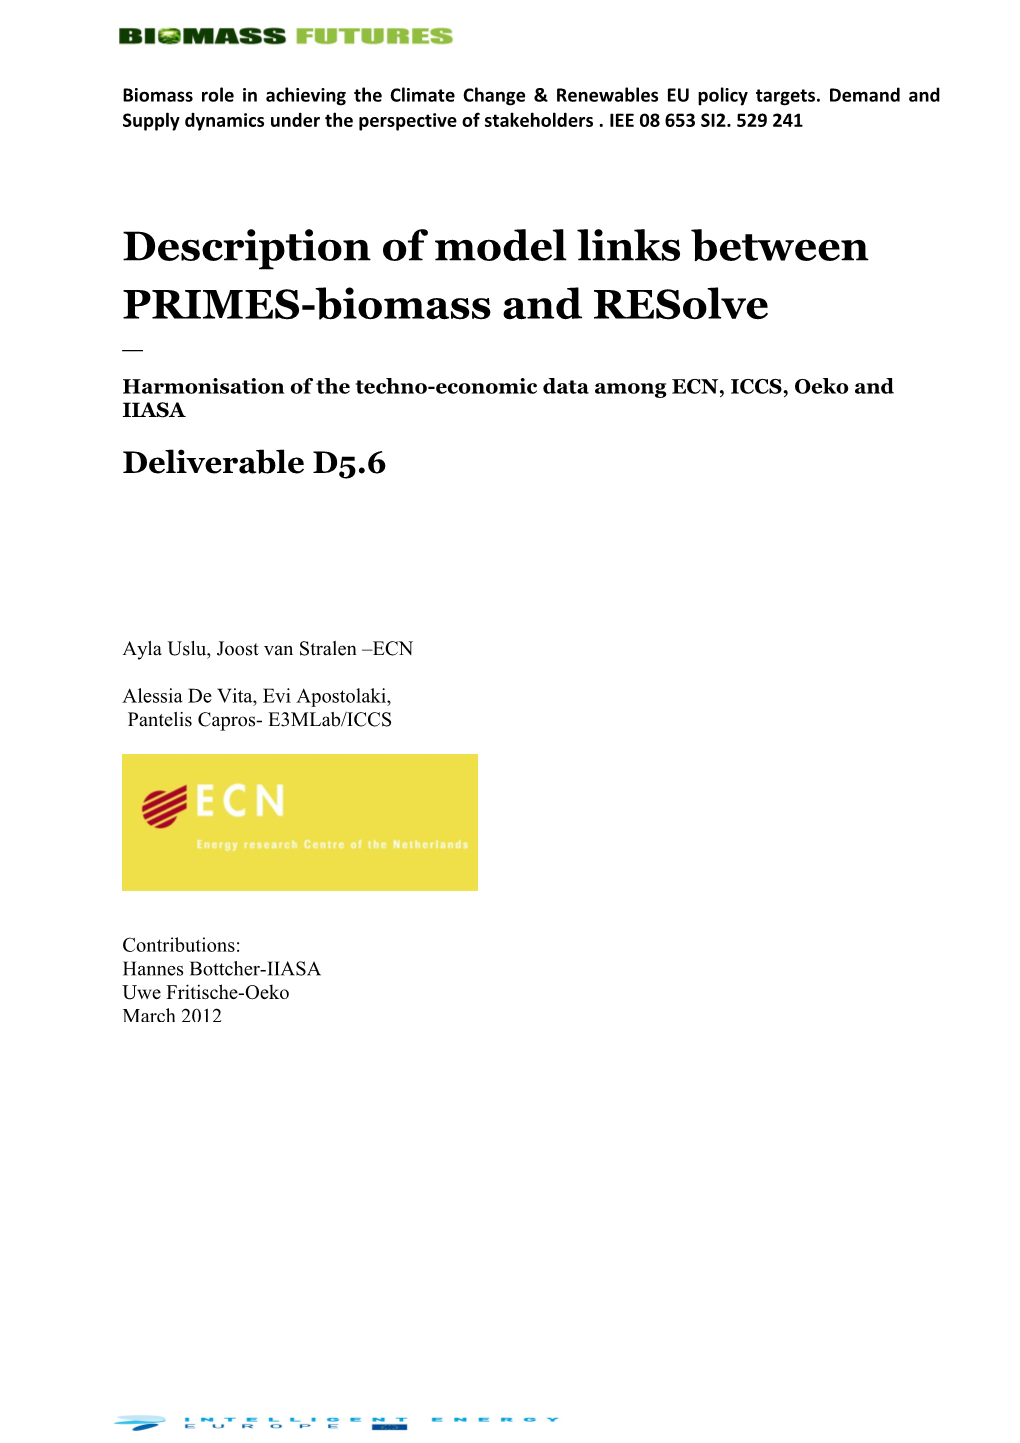 2Functional Description of Resolve Model Set and PRIMES Biomass Model